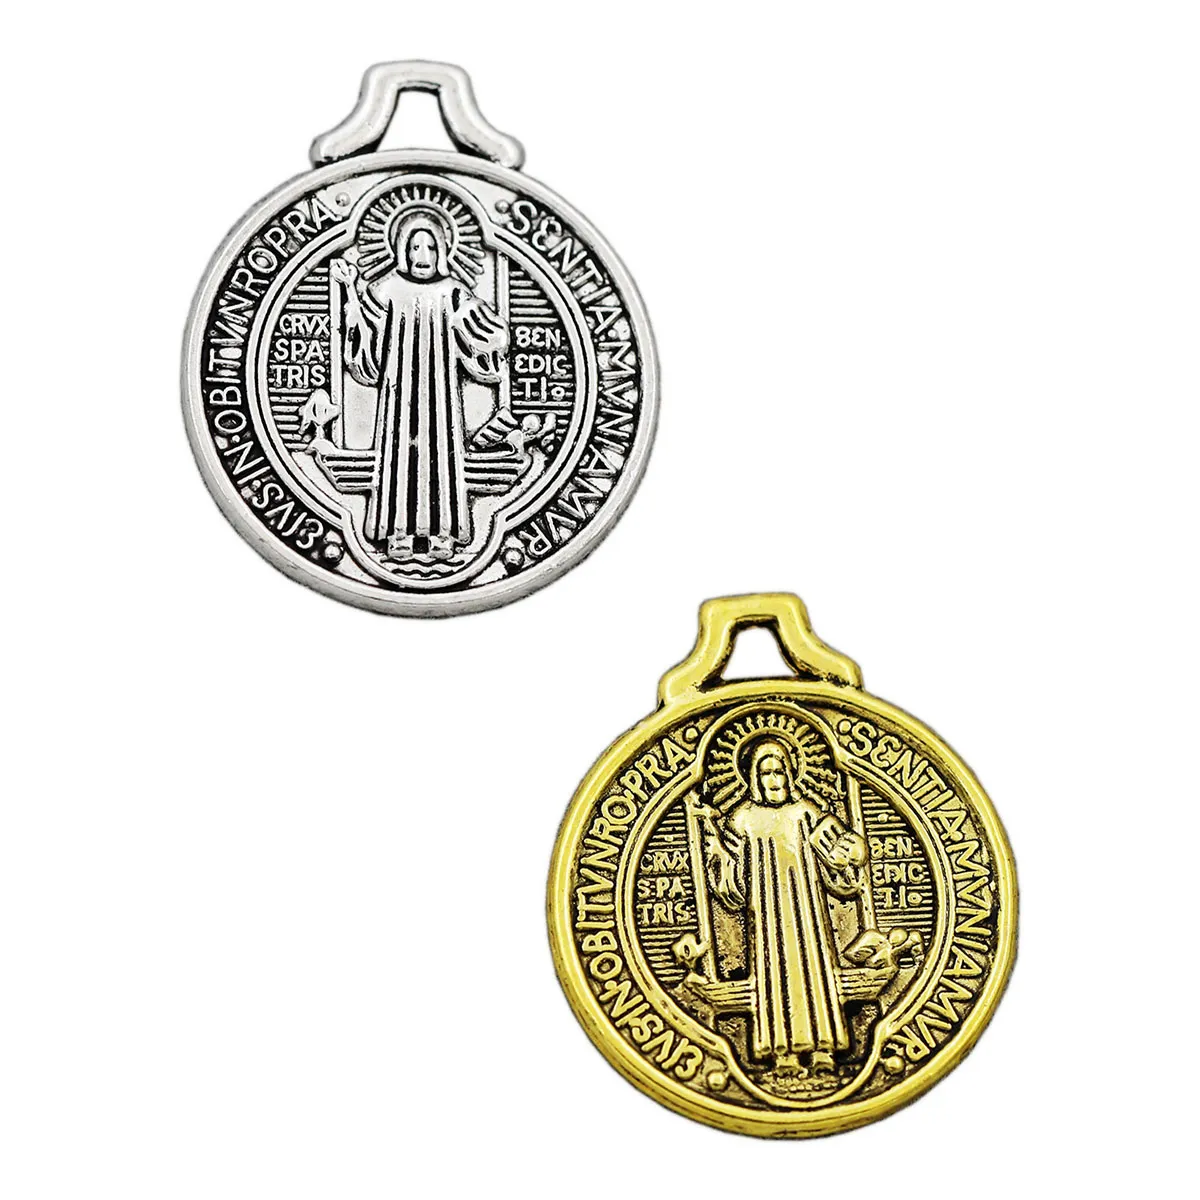 Medalla de San Benito Charms Cross Smqlivb Charm Beads Catholic Memorabilia 18.3x21.7mm Antique Silver Pendants Jewelry DIY L496 36pcs/lot